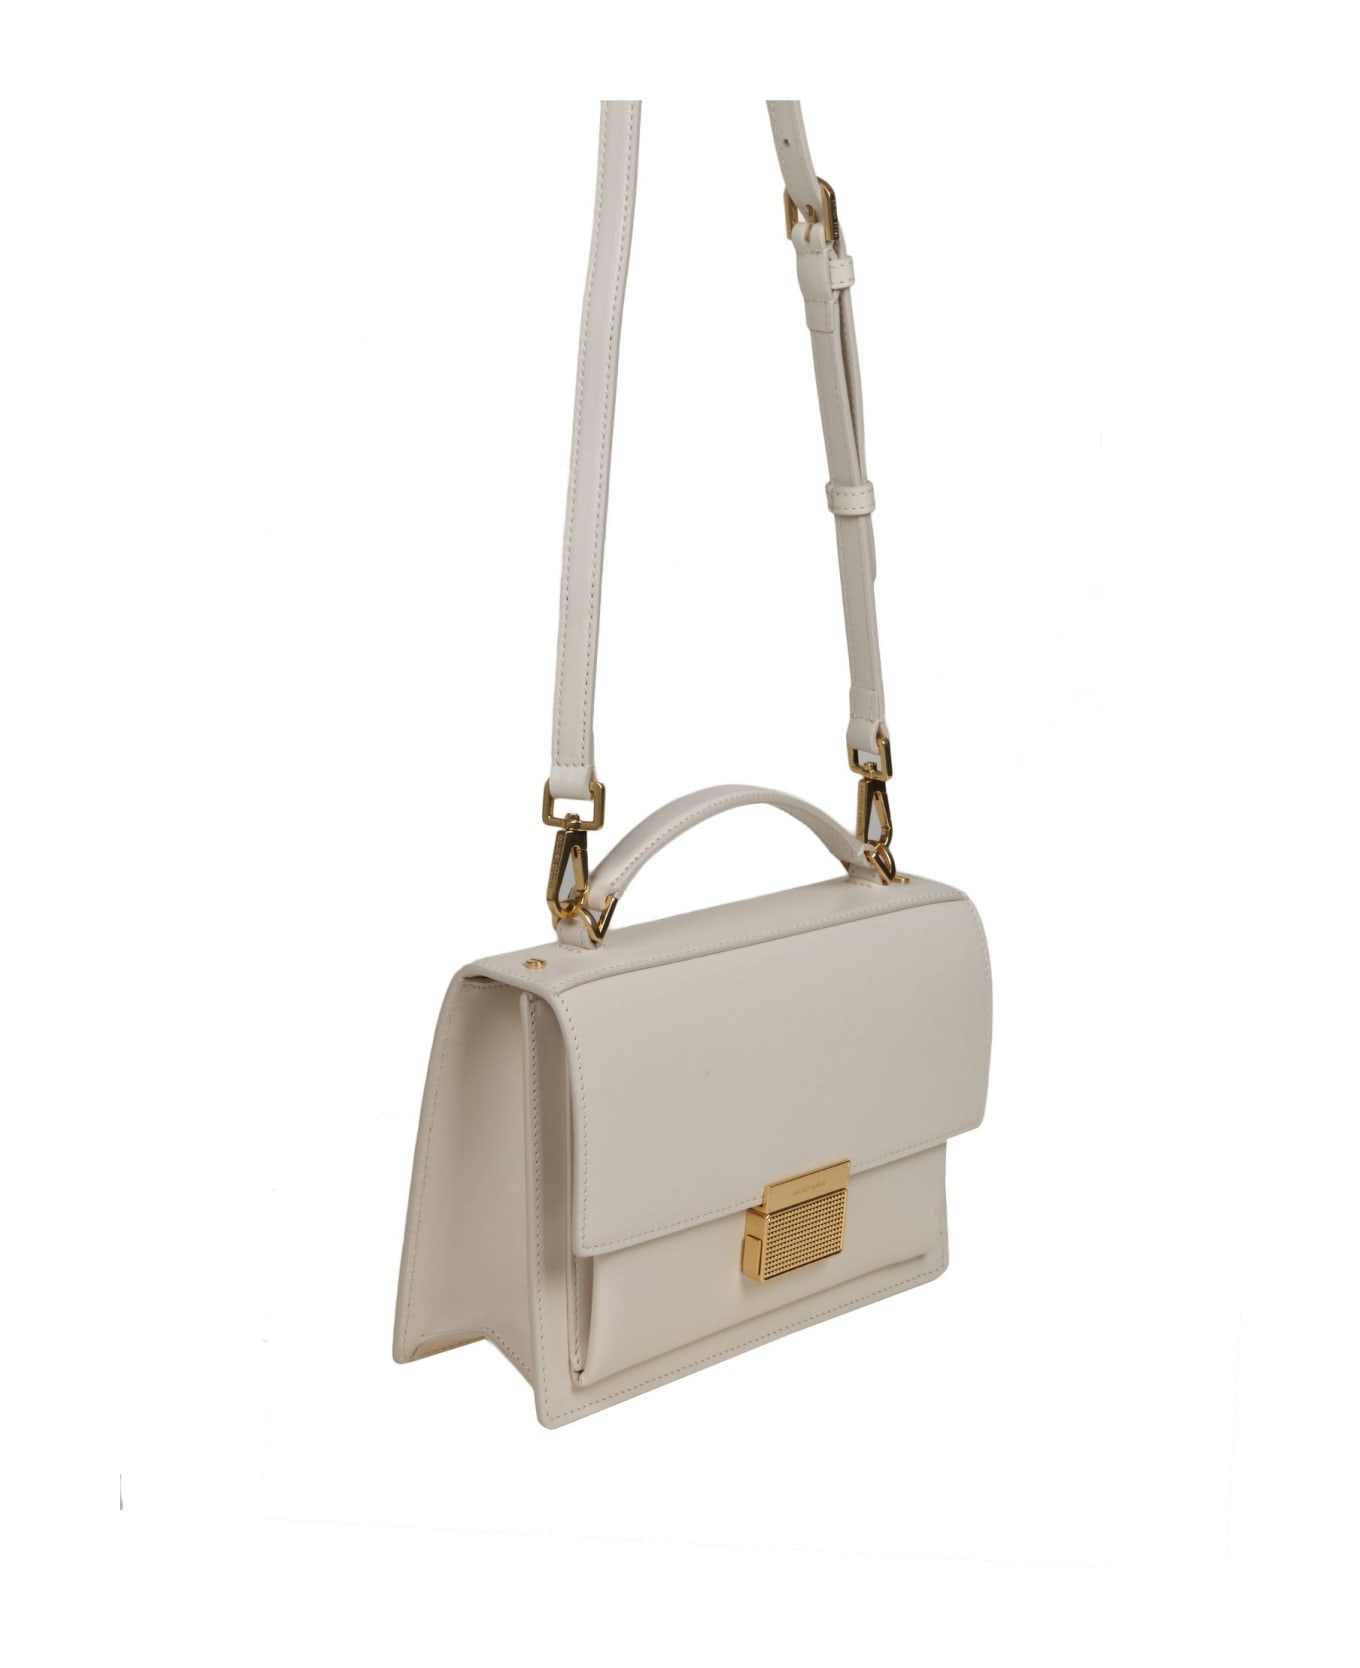 Golden Goose Venezia Handbag In Butter Color Leather - Butter